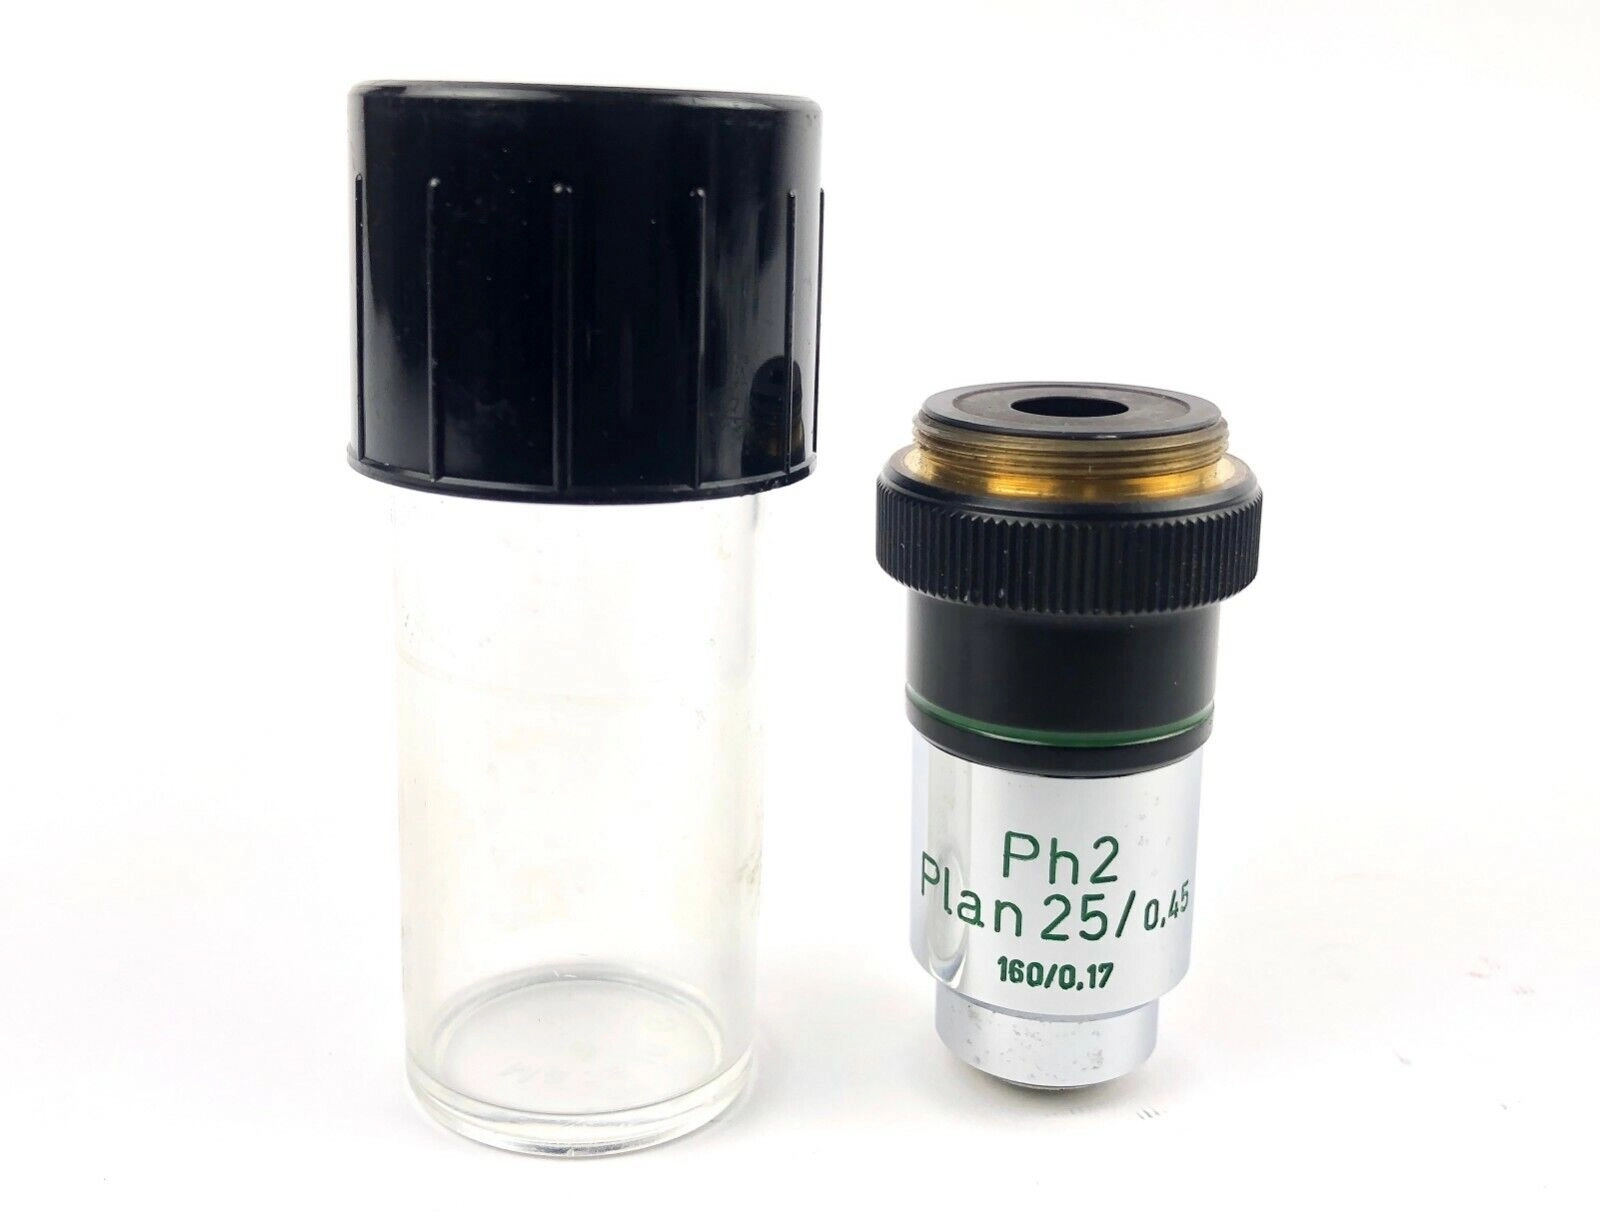 Carl Zeiss Microscope Objective Ph2 Plan 25x , 0.4